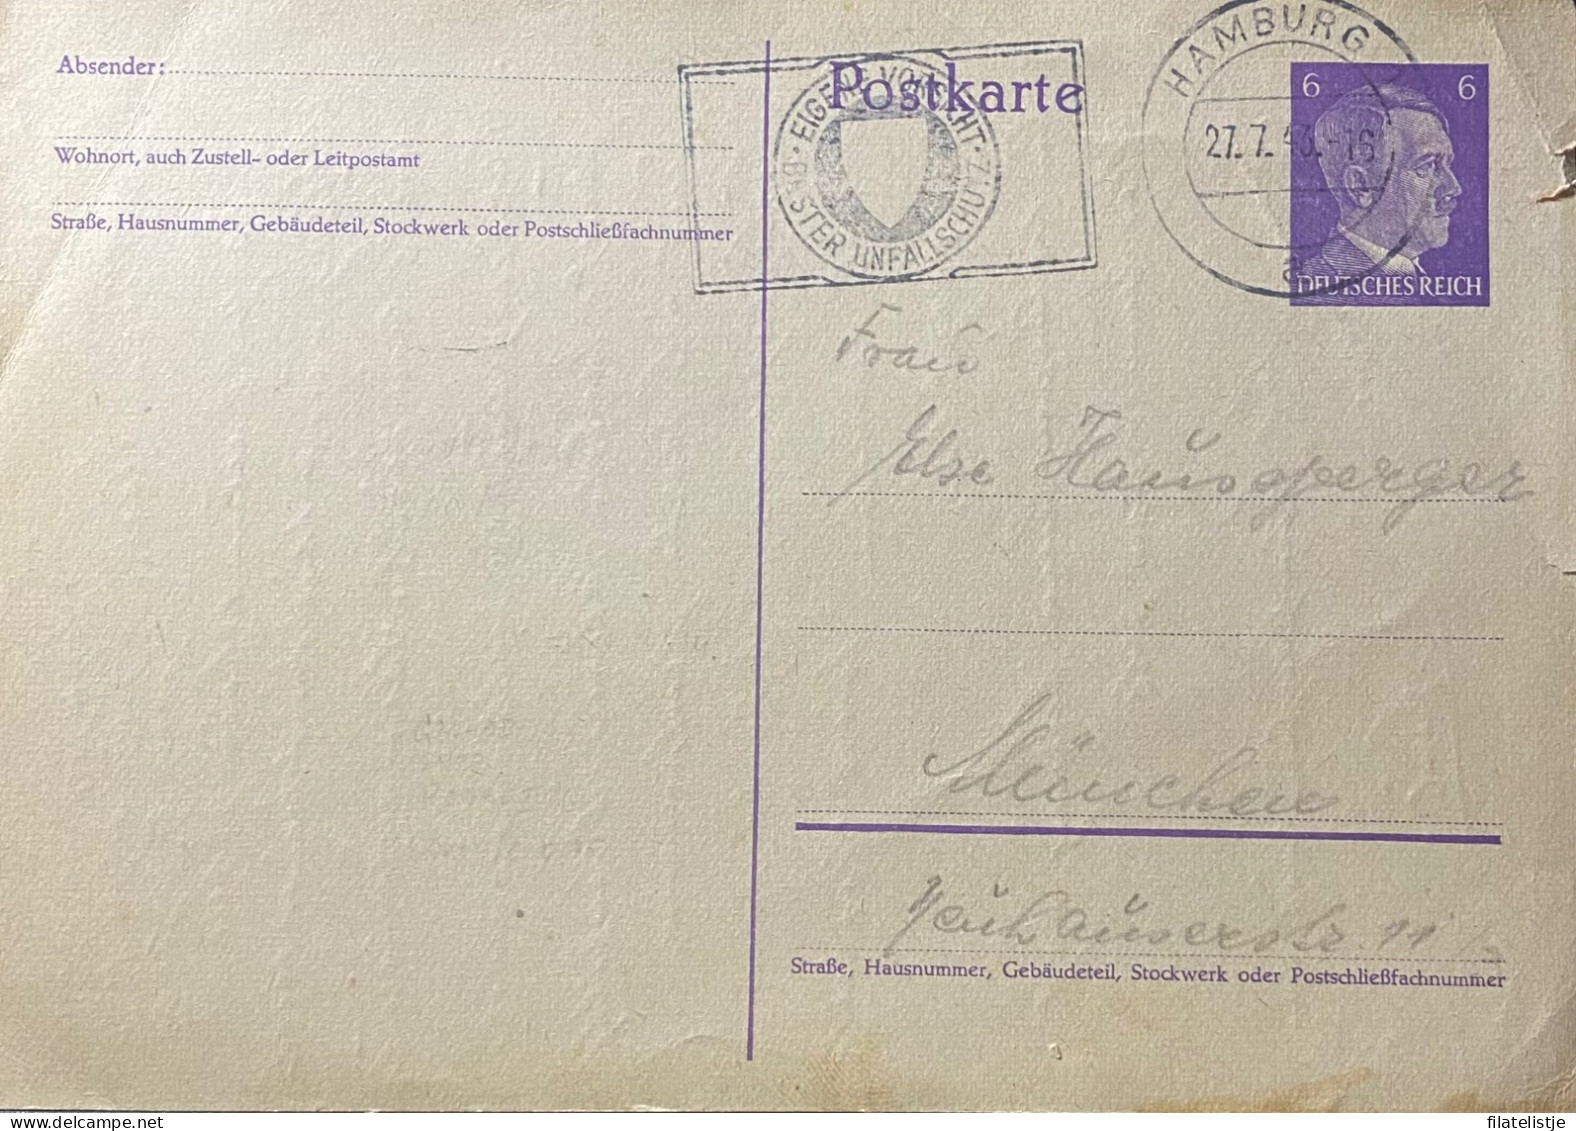 Duitse Rijk Briefkaart - Markenheftchen